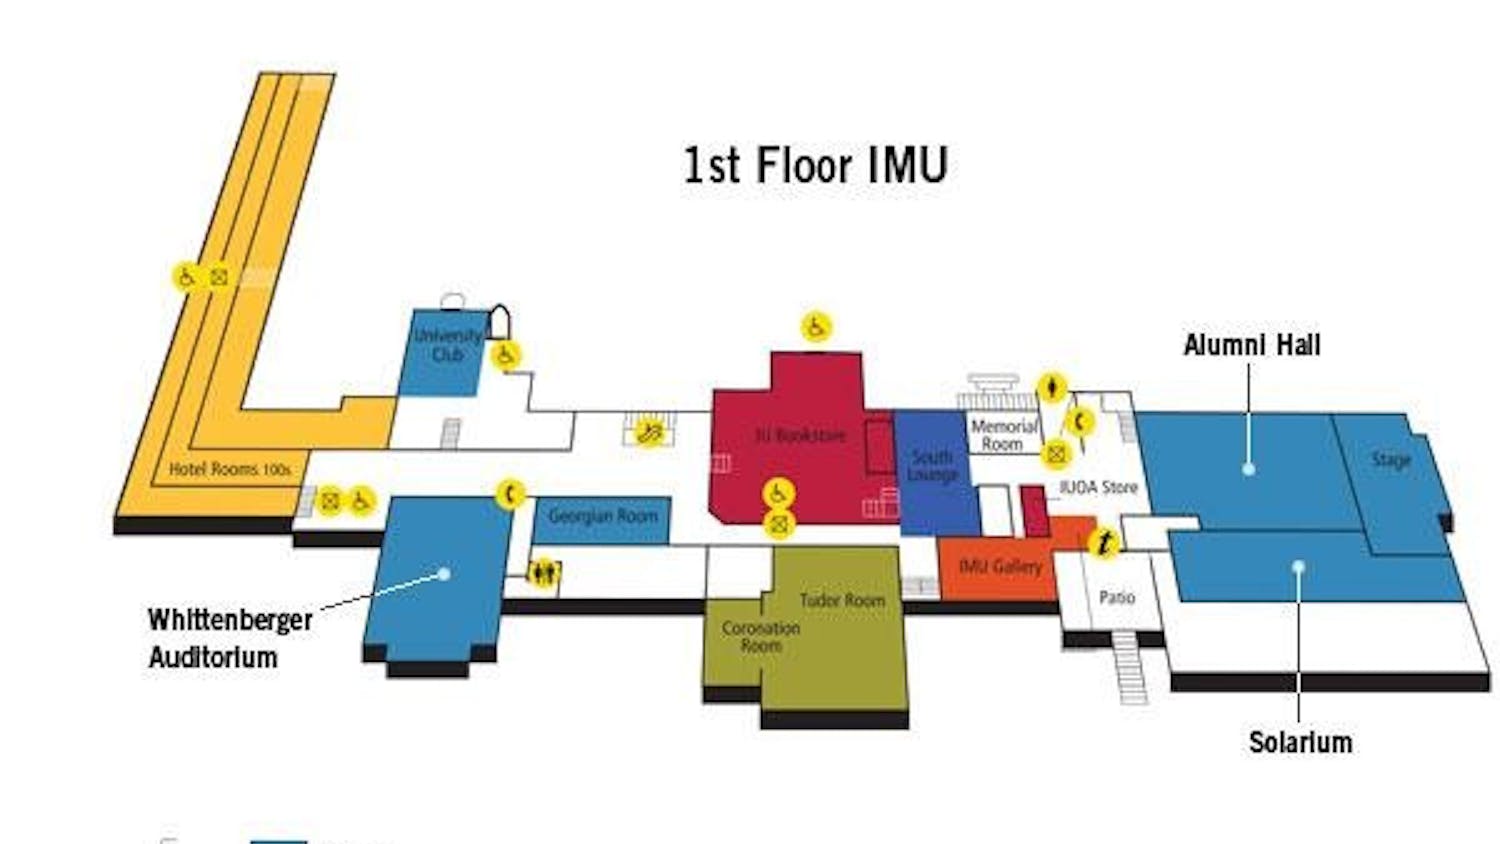 Inside the IMU